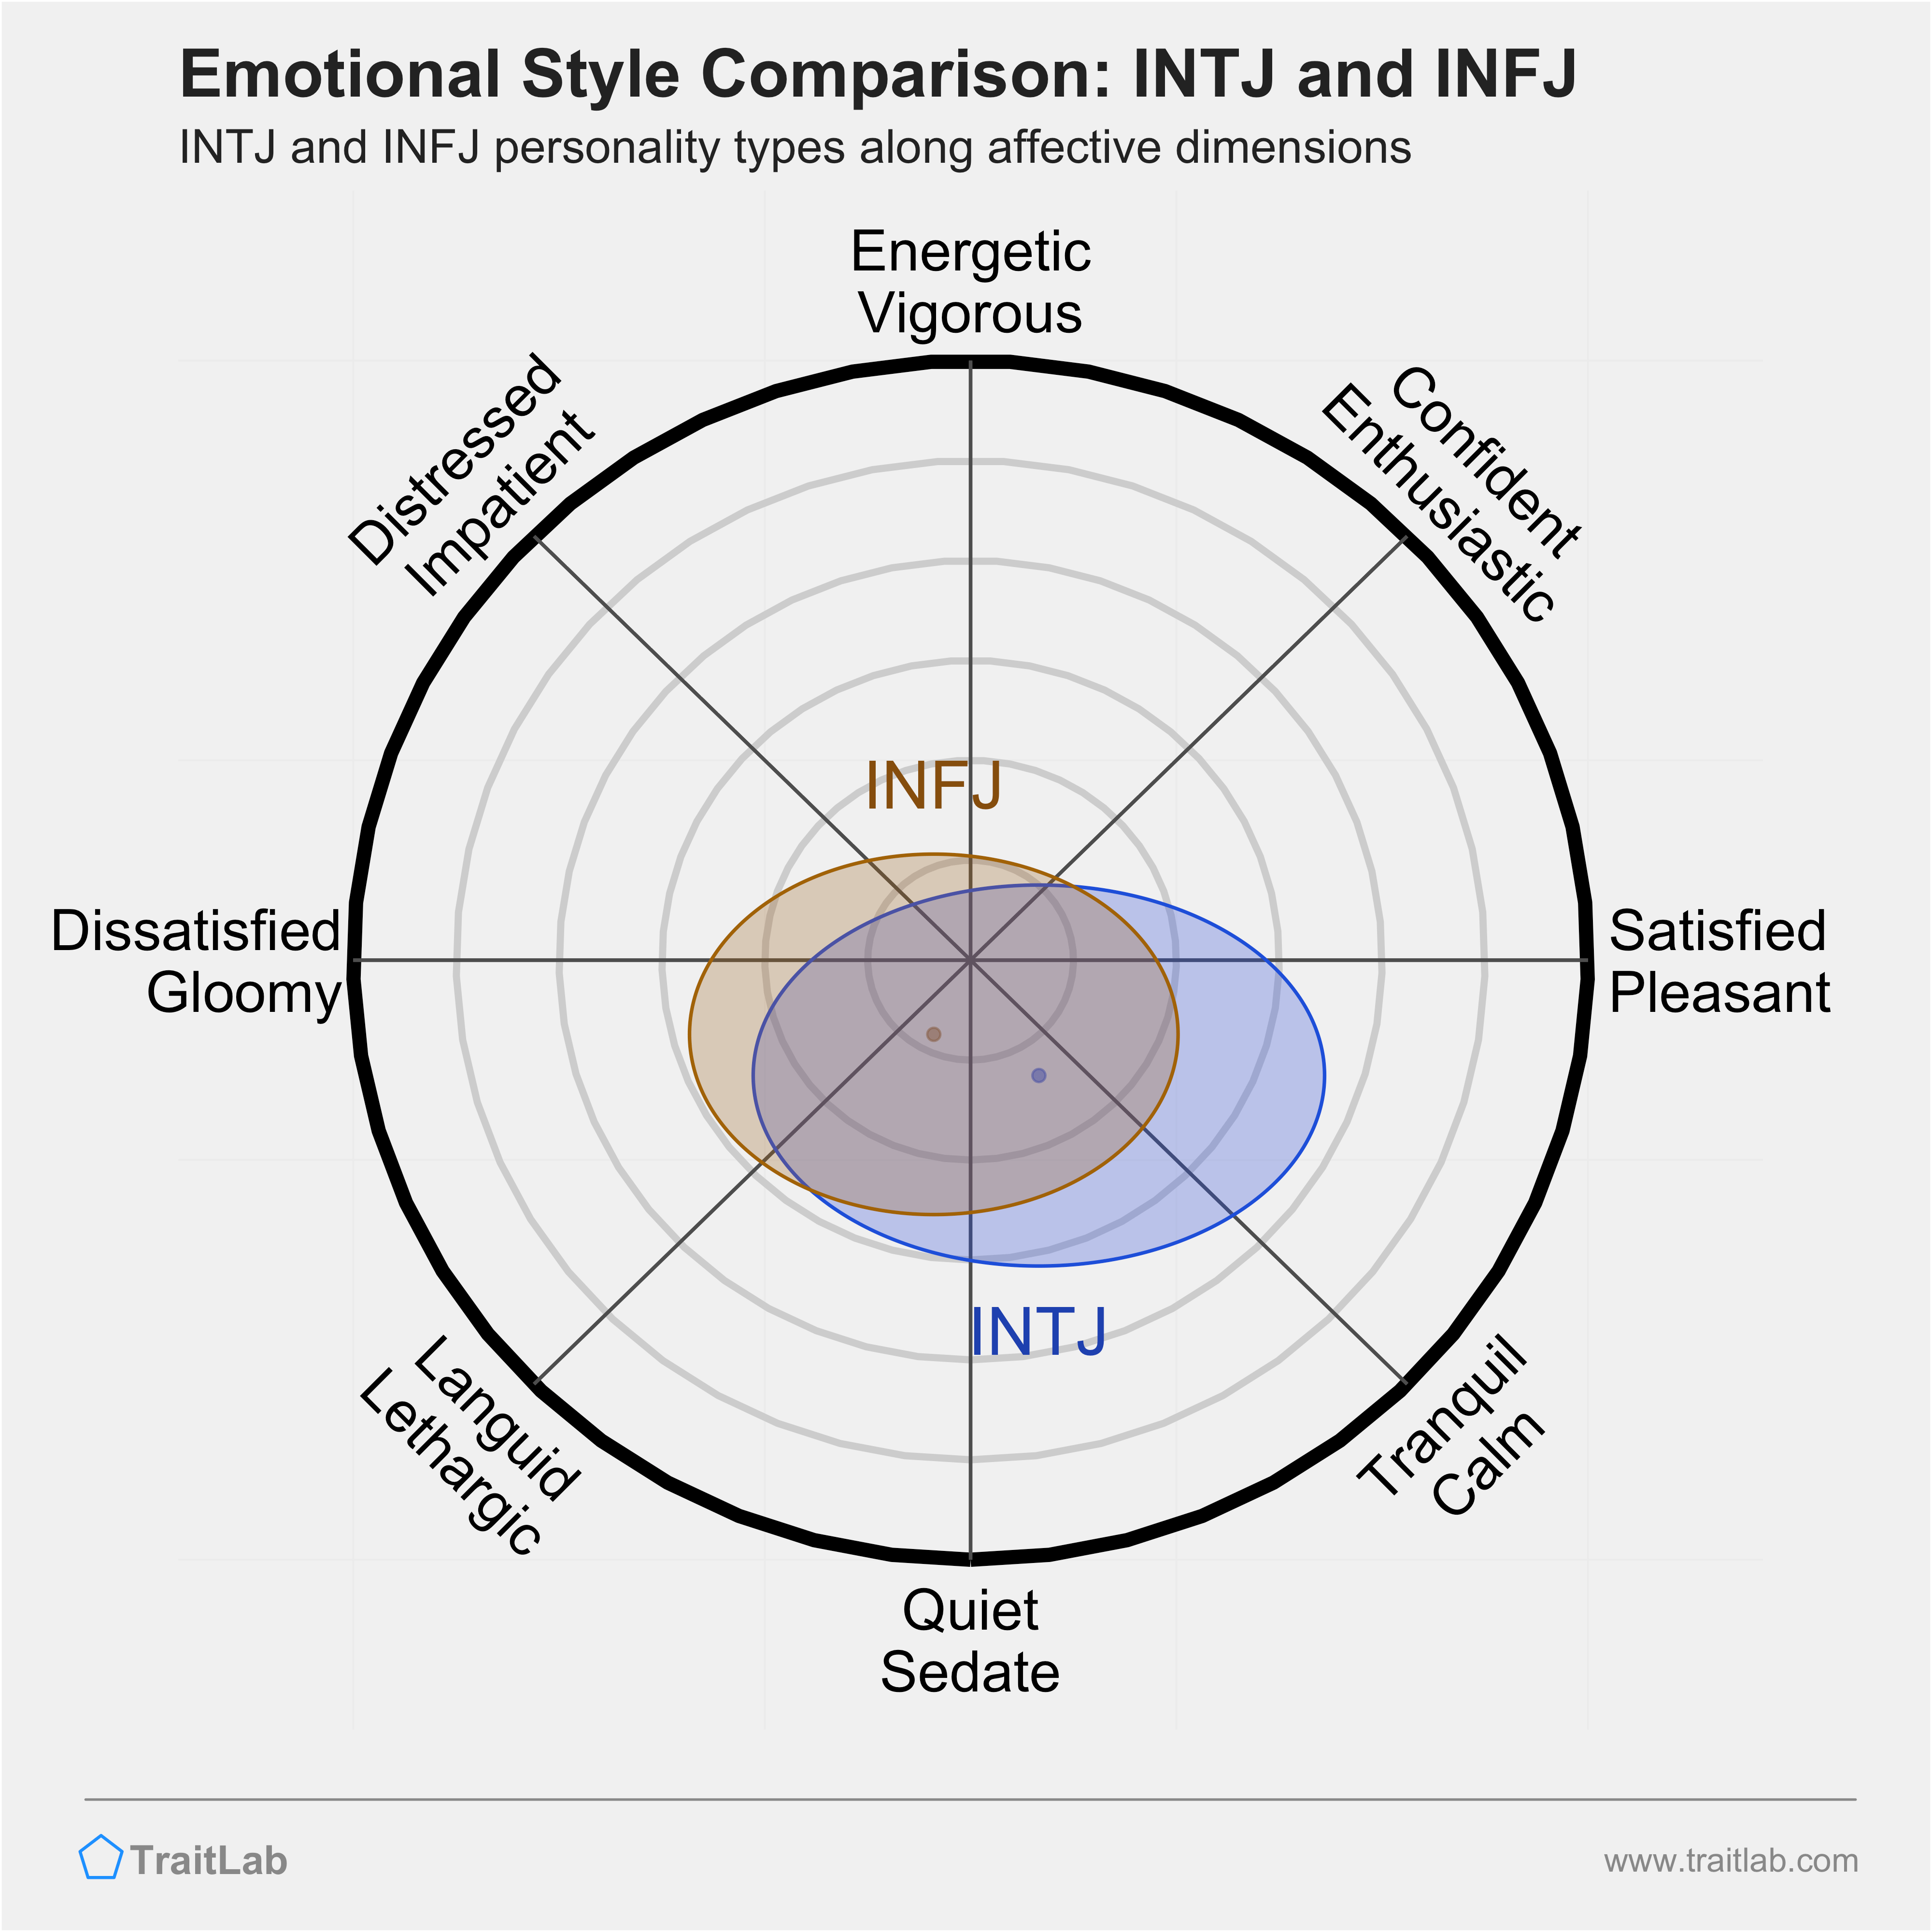 INTJ and INFJ comparison across emotional (affective) dimensions